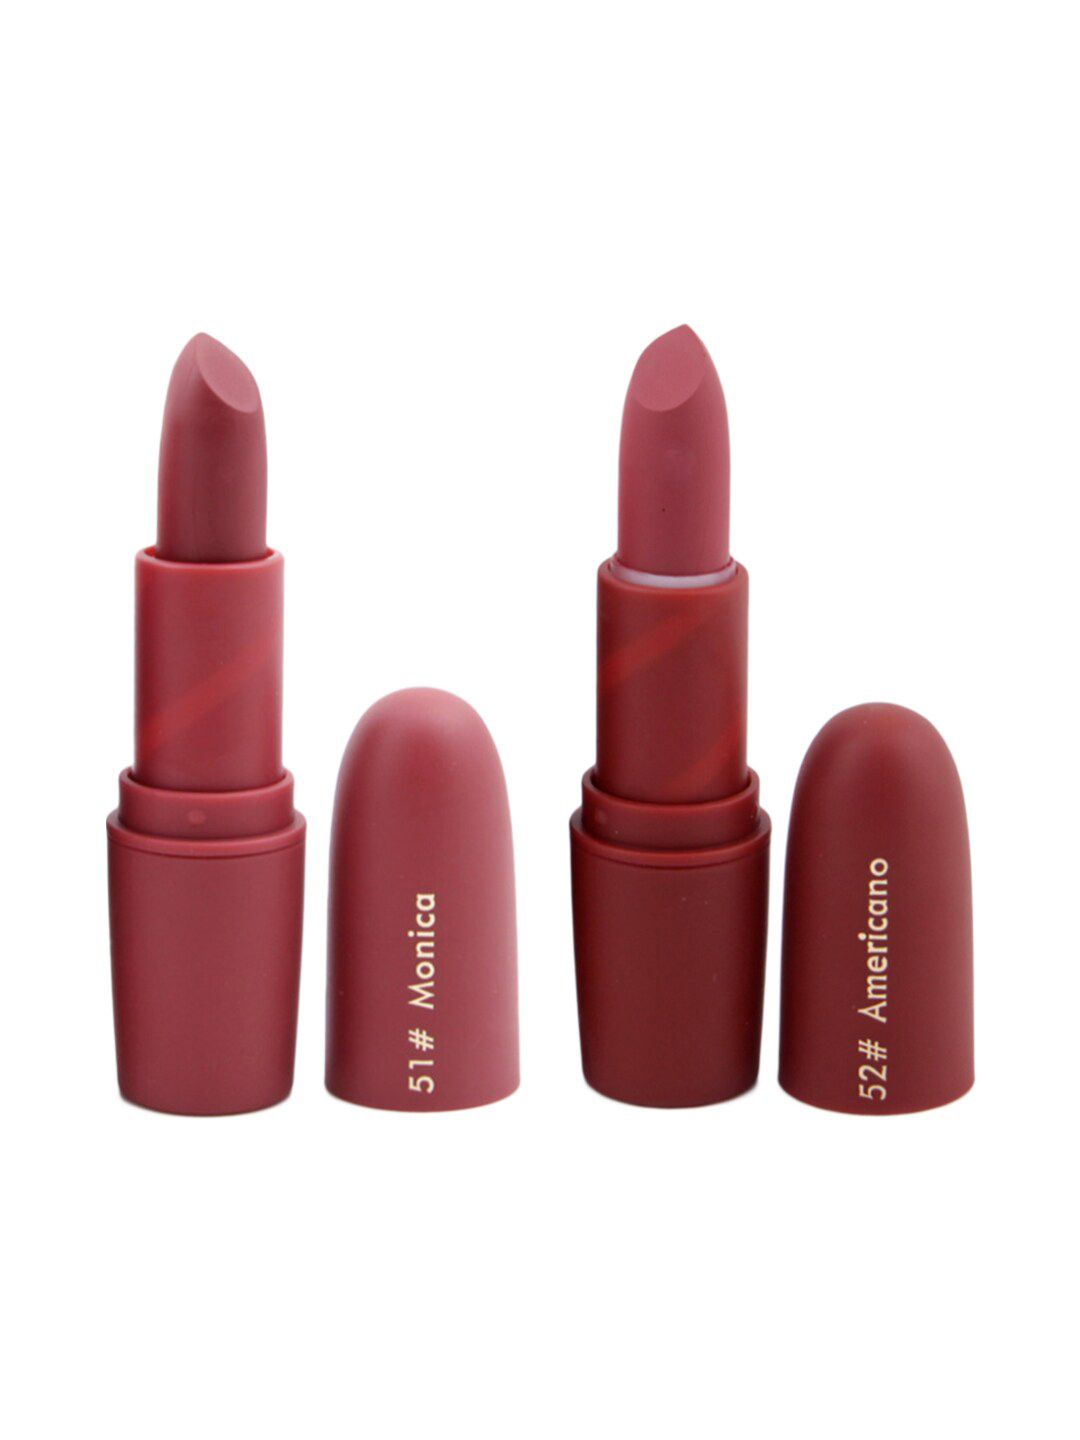 MISS ROSE Professional Make-Up Set of 2 Matte Creamy Lipsticks - Monica 51 & Americano 52 Price in India